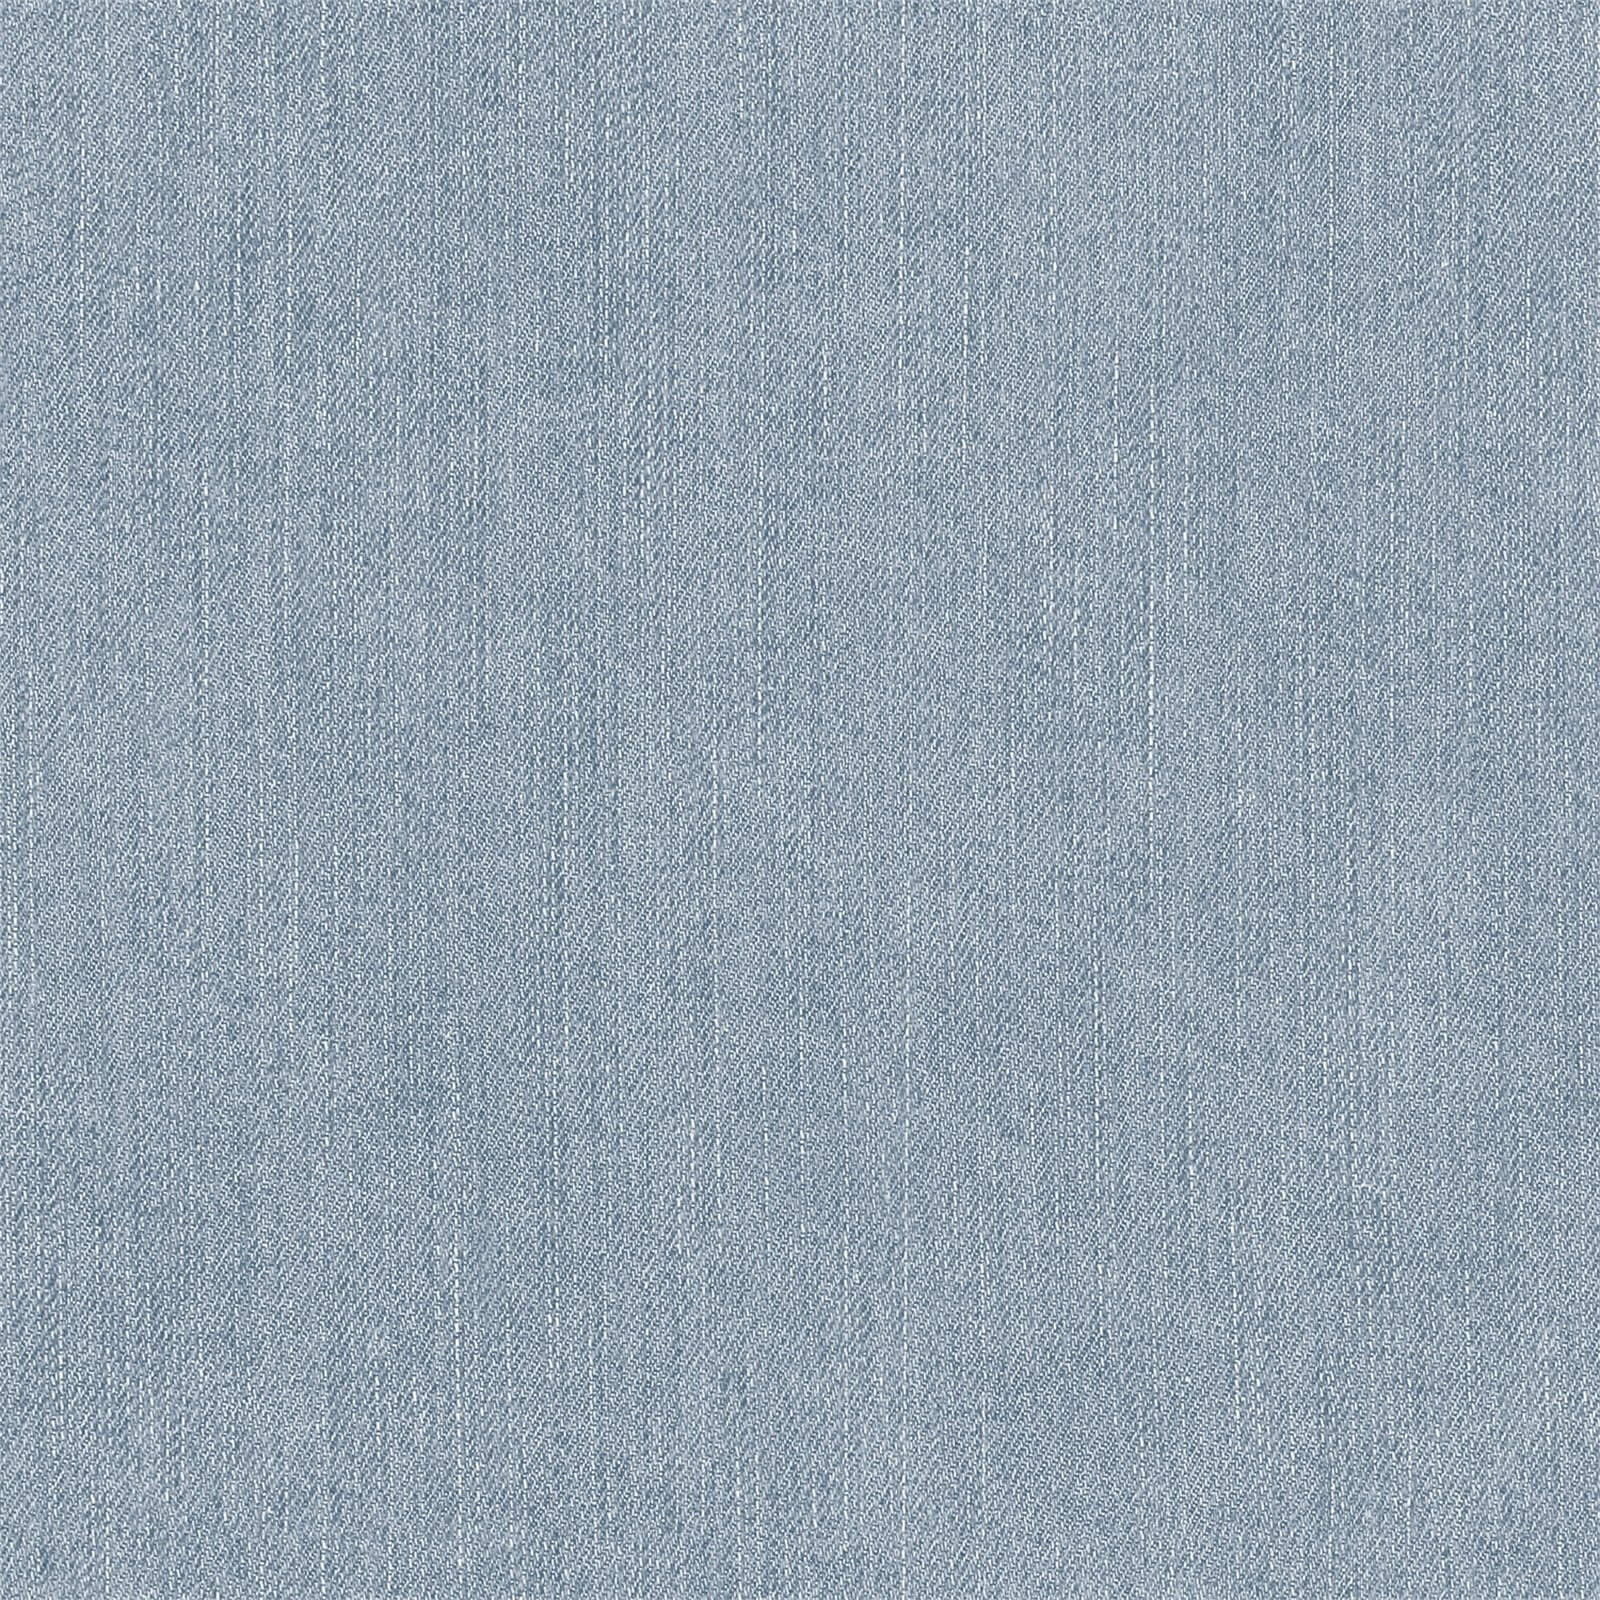 Arthouse Denim Plain Smooth Blue Wallpaper